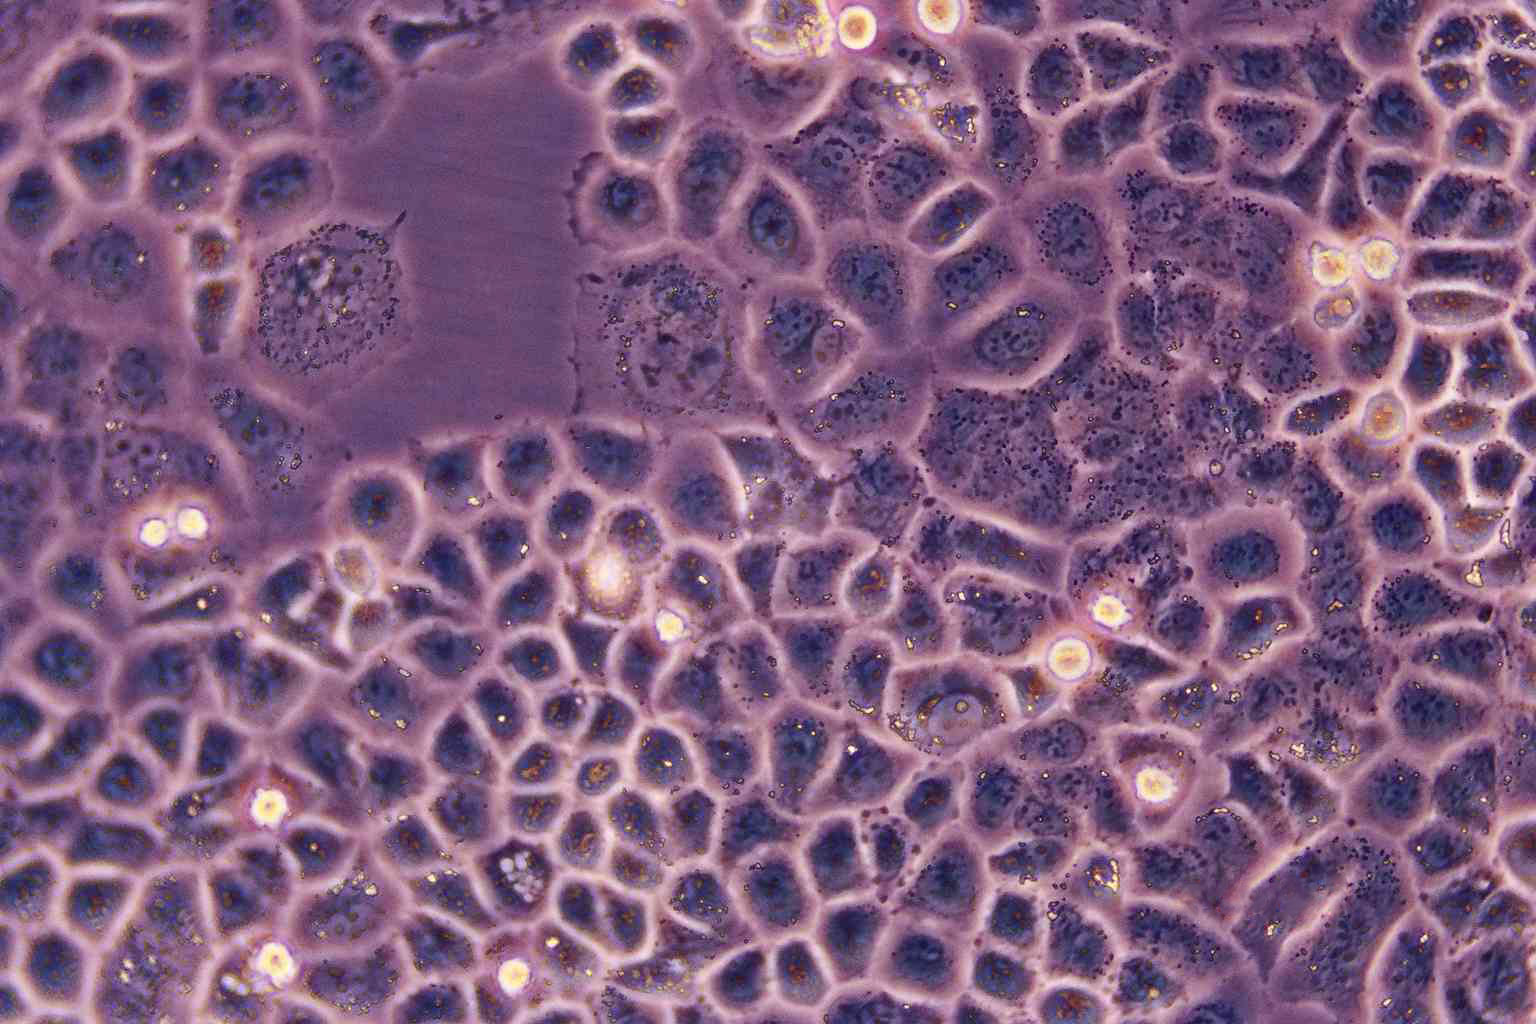 Rca-B epithelioid cells大鼠鳞癌细胞系